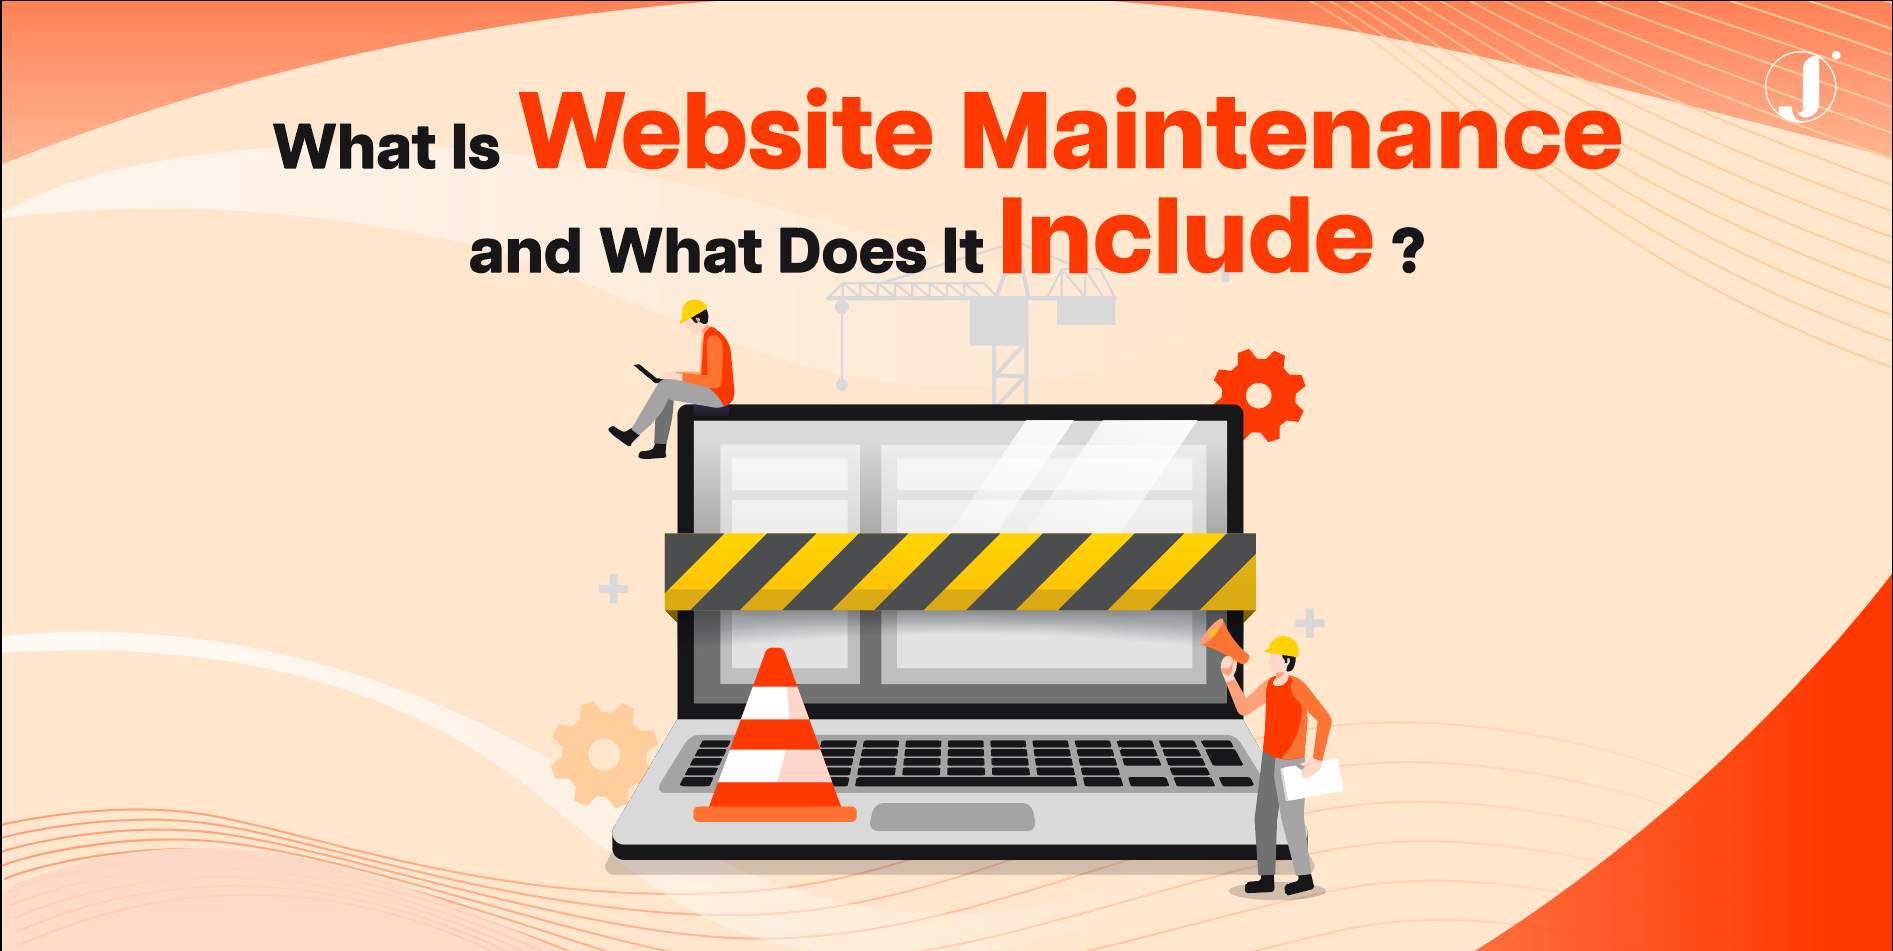 Regular Website Maintenance for Businesses